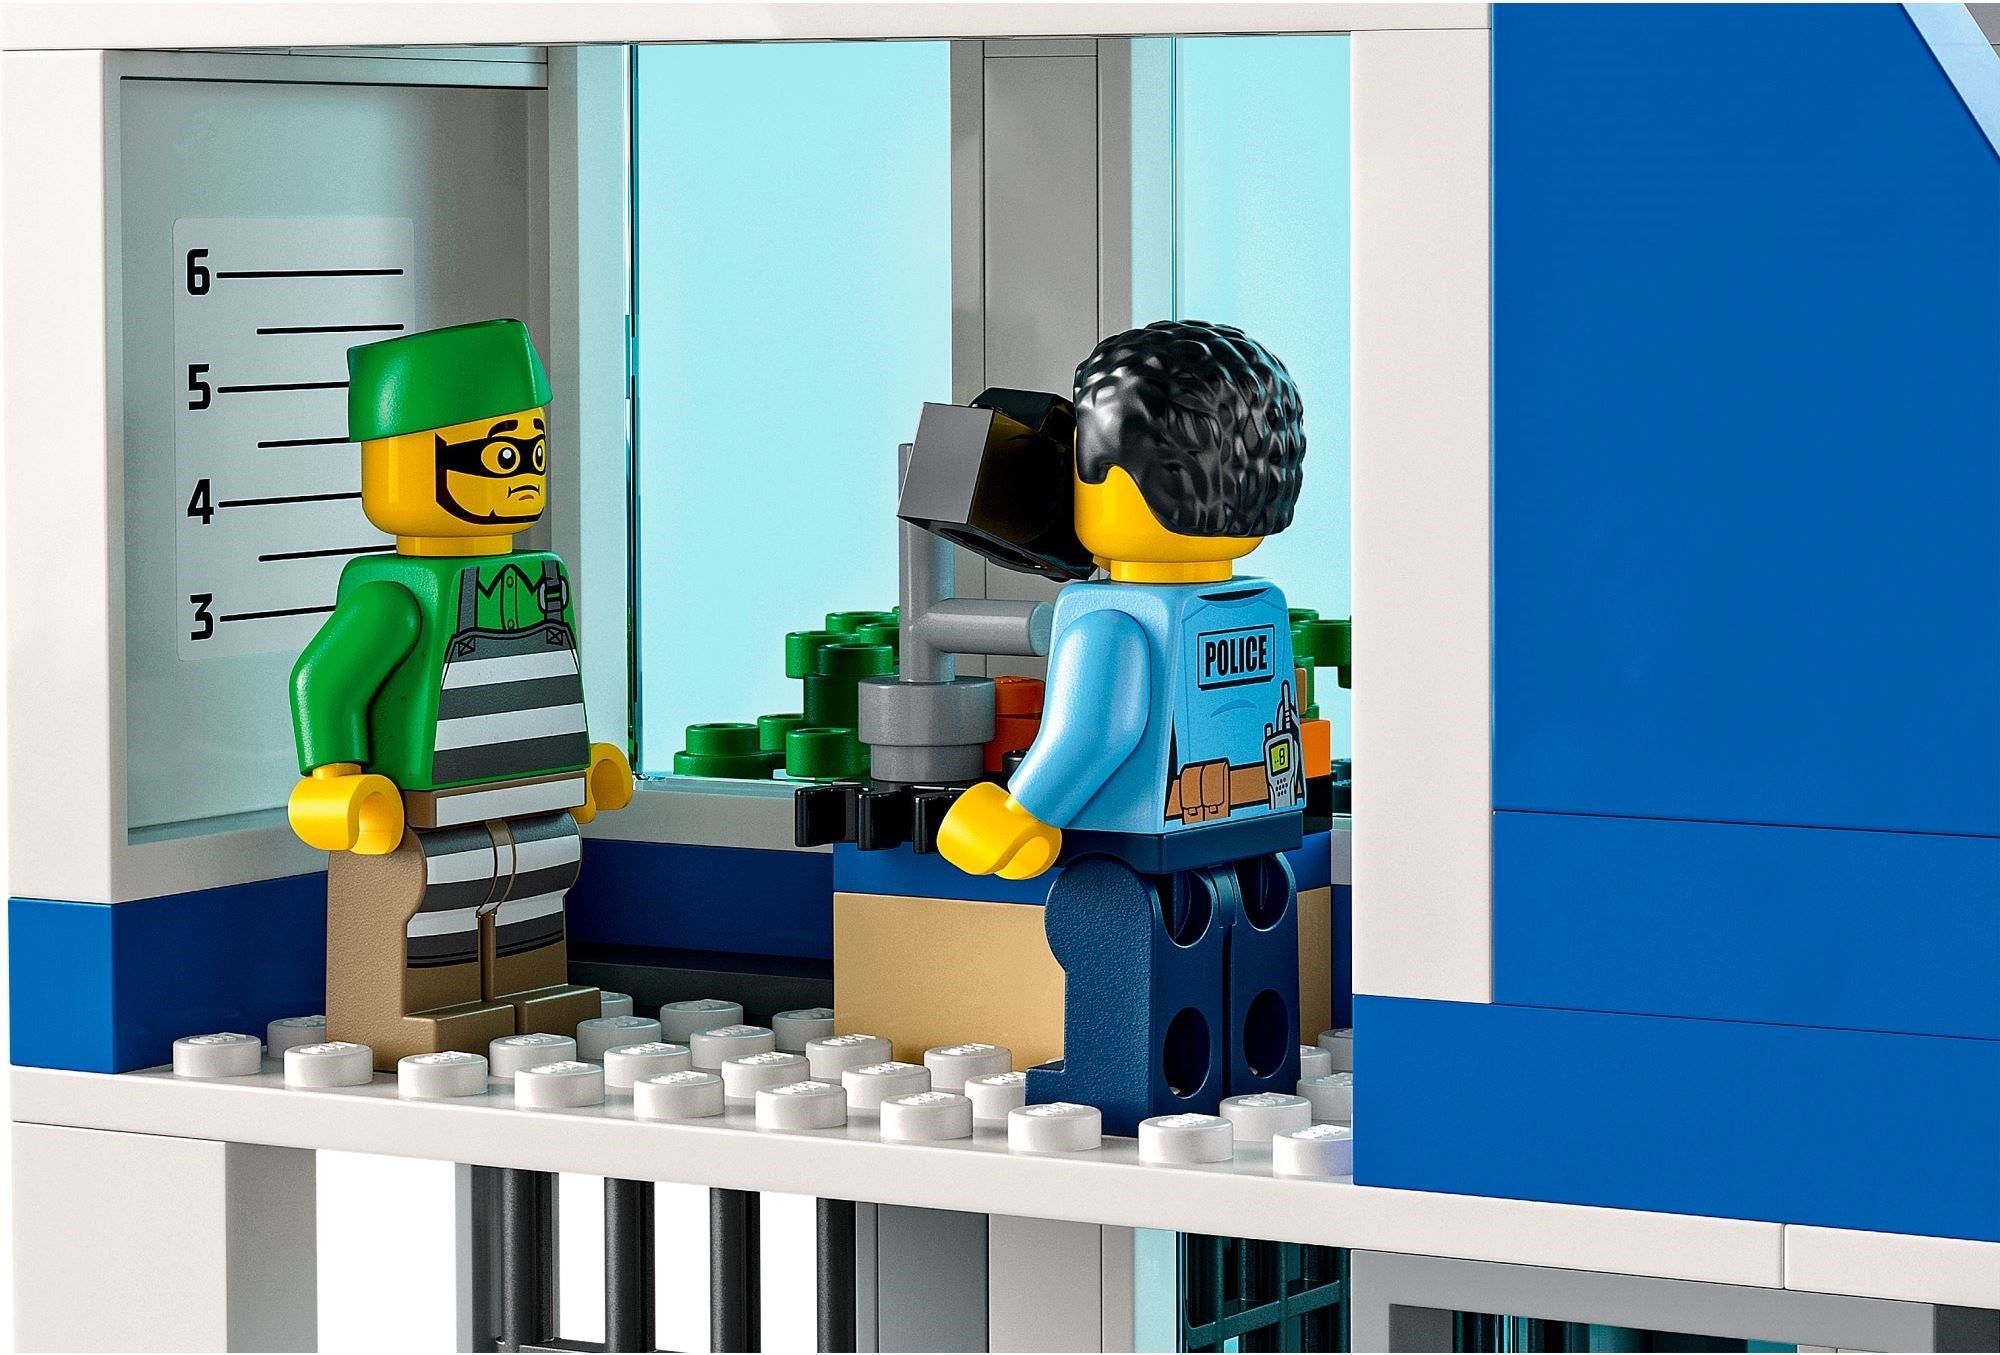 LEGO 60316 Police Station